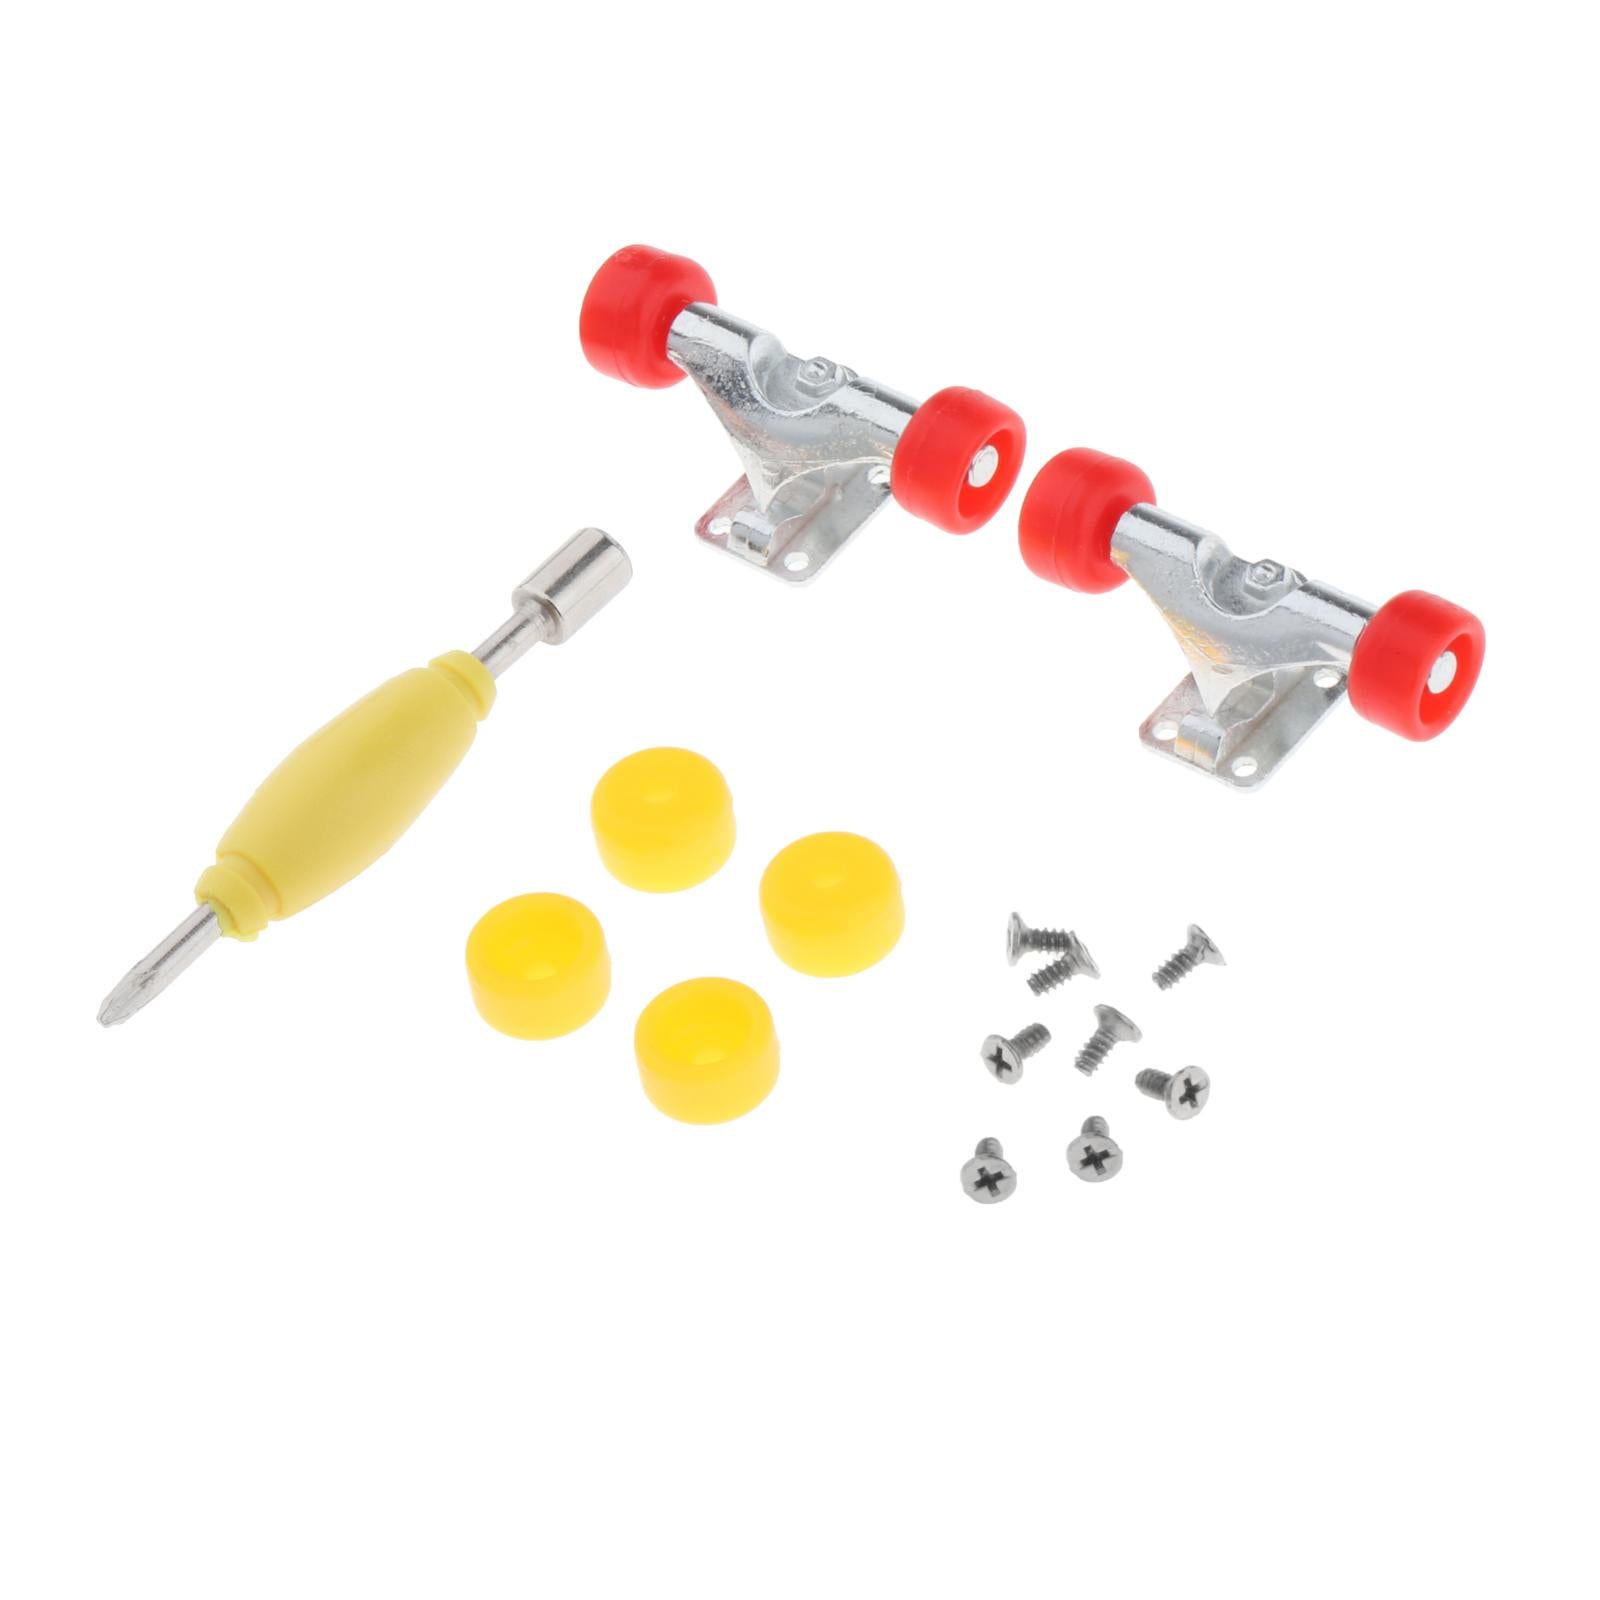 Finger Skateboard Complete Fingerboards Fingertip Toy Repair Wrench Model 4